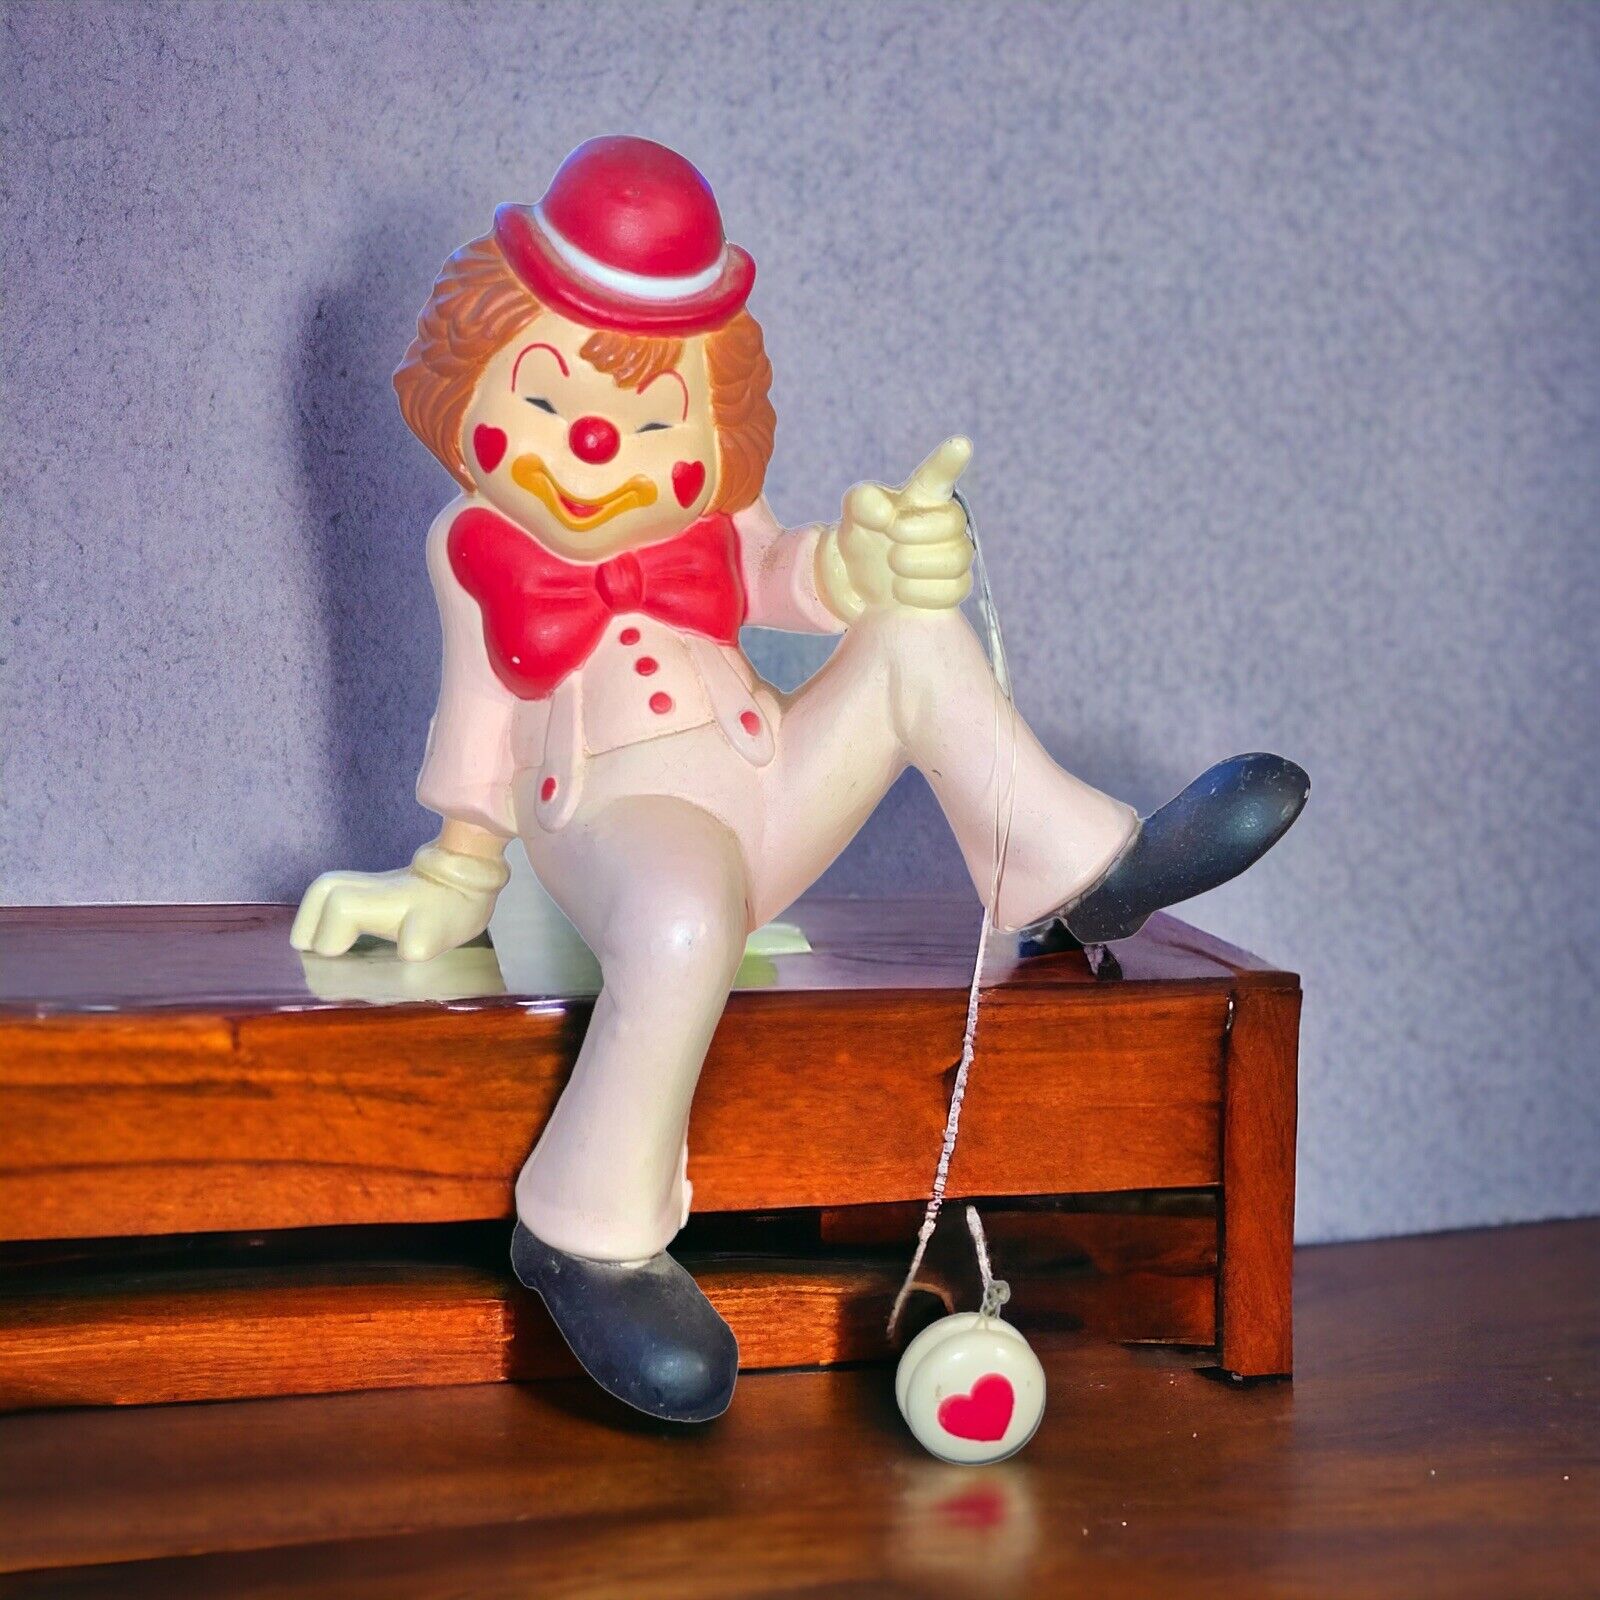 1985 Enesco Valentine’s Day Ceramic Clown 5” Shelf Sitter with Heart